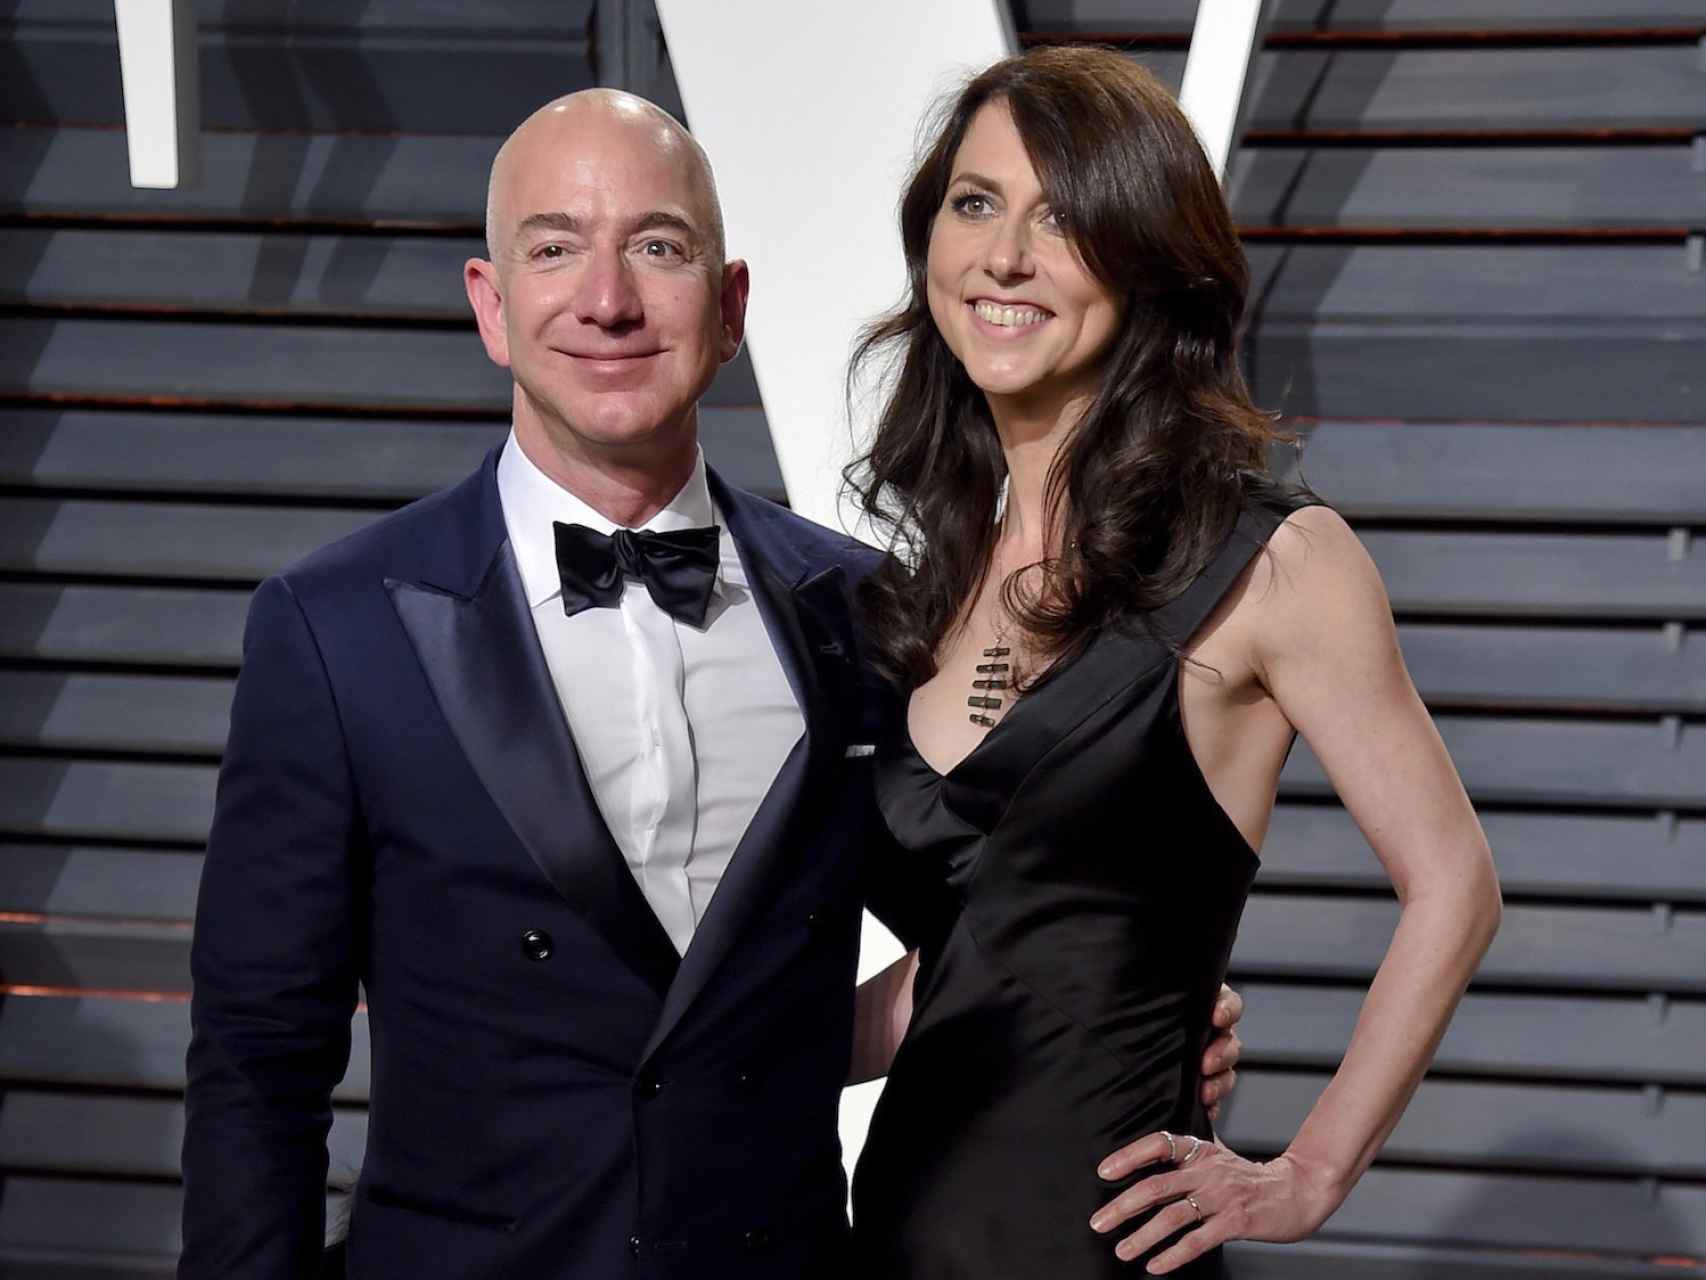 Jeff y McKenzie fundaron Amazon juntos.